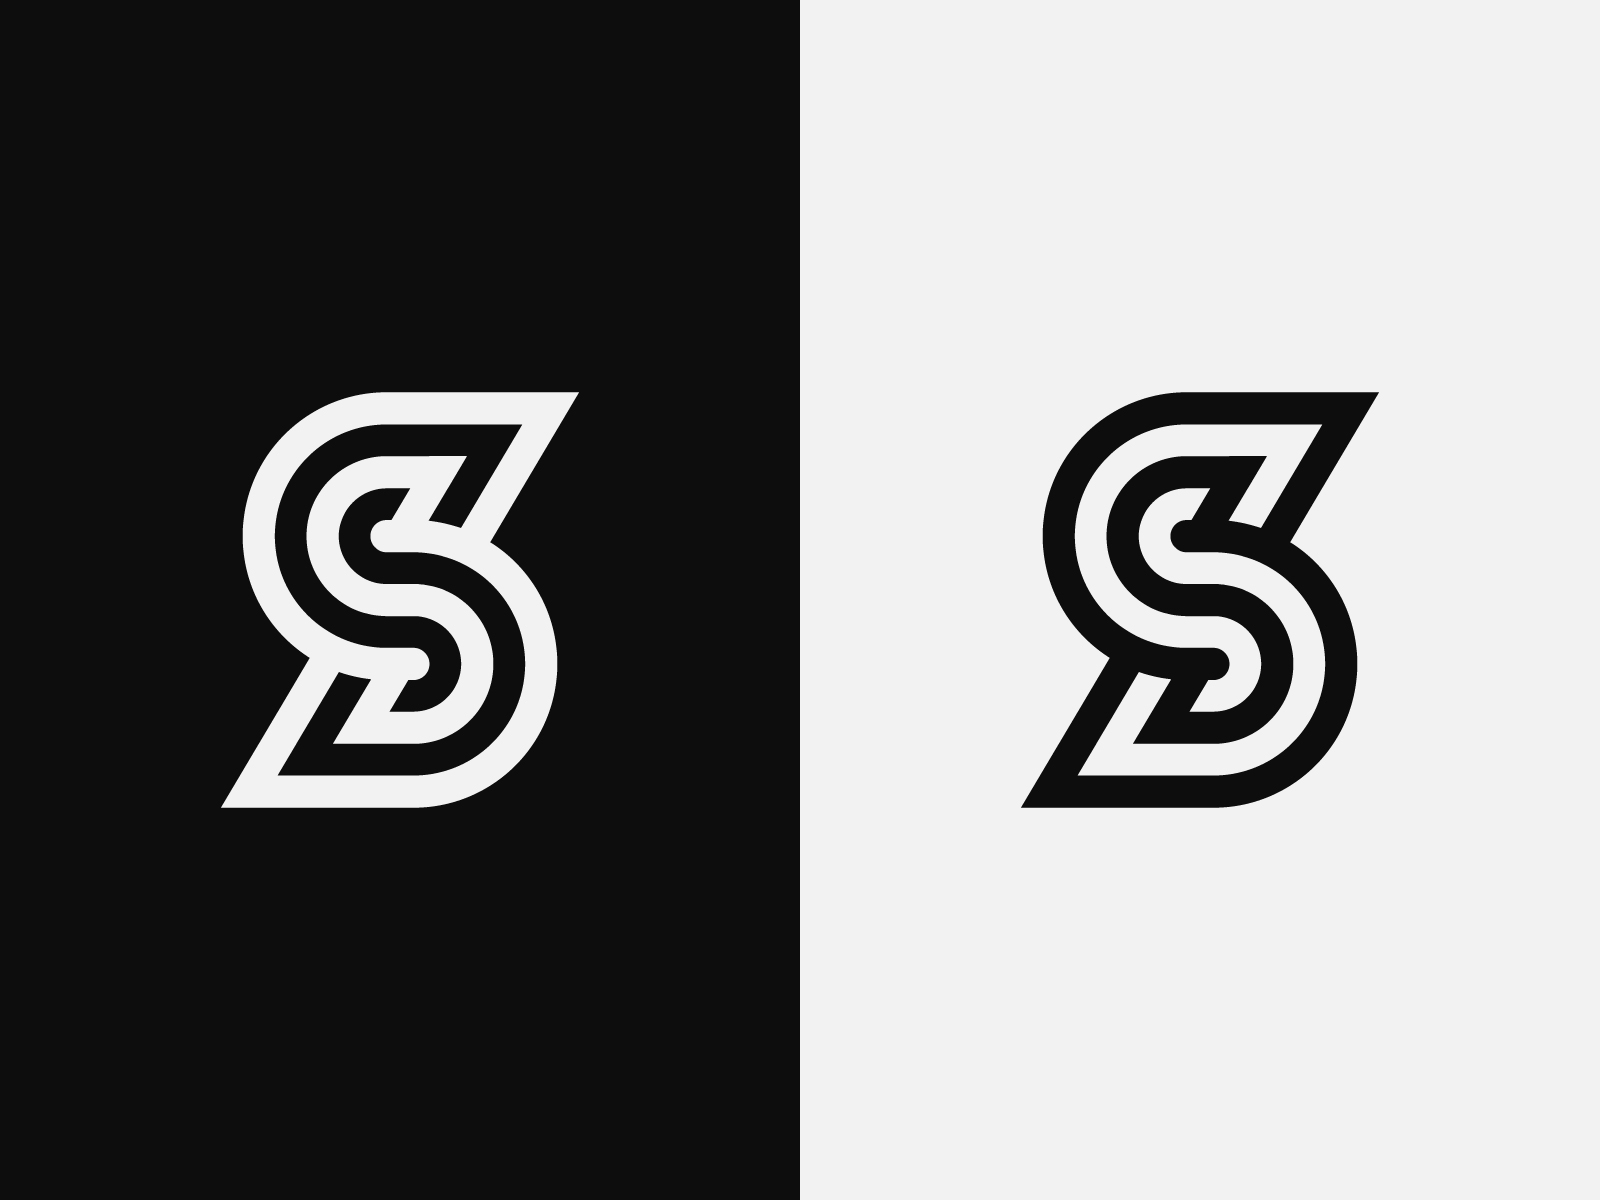 DS Logo or SD Logo by Sabuj Ali on Dribbble